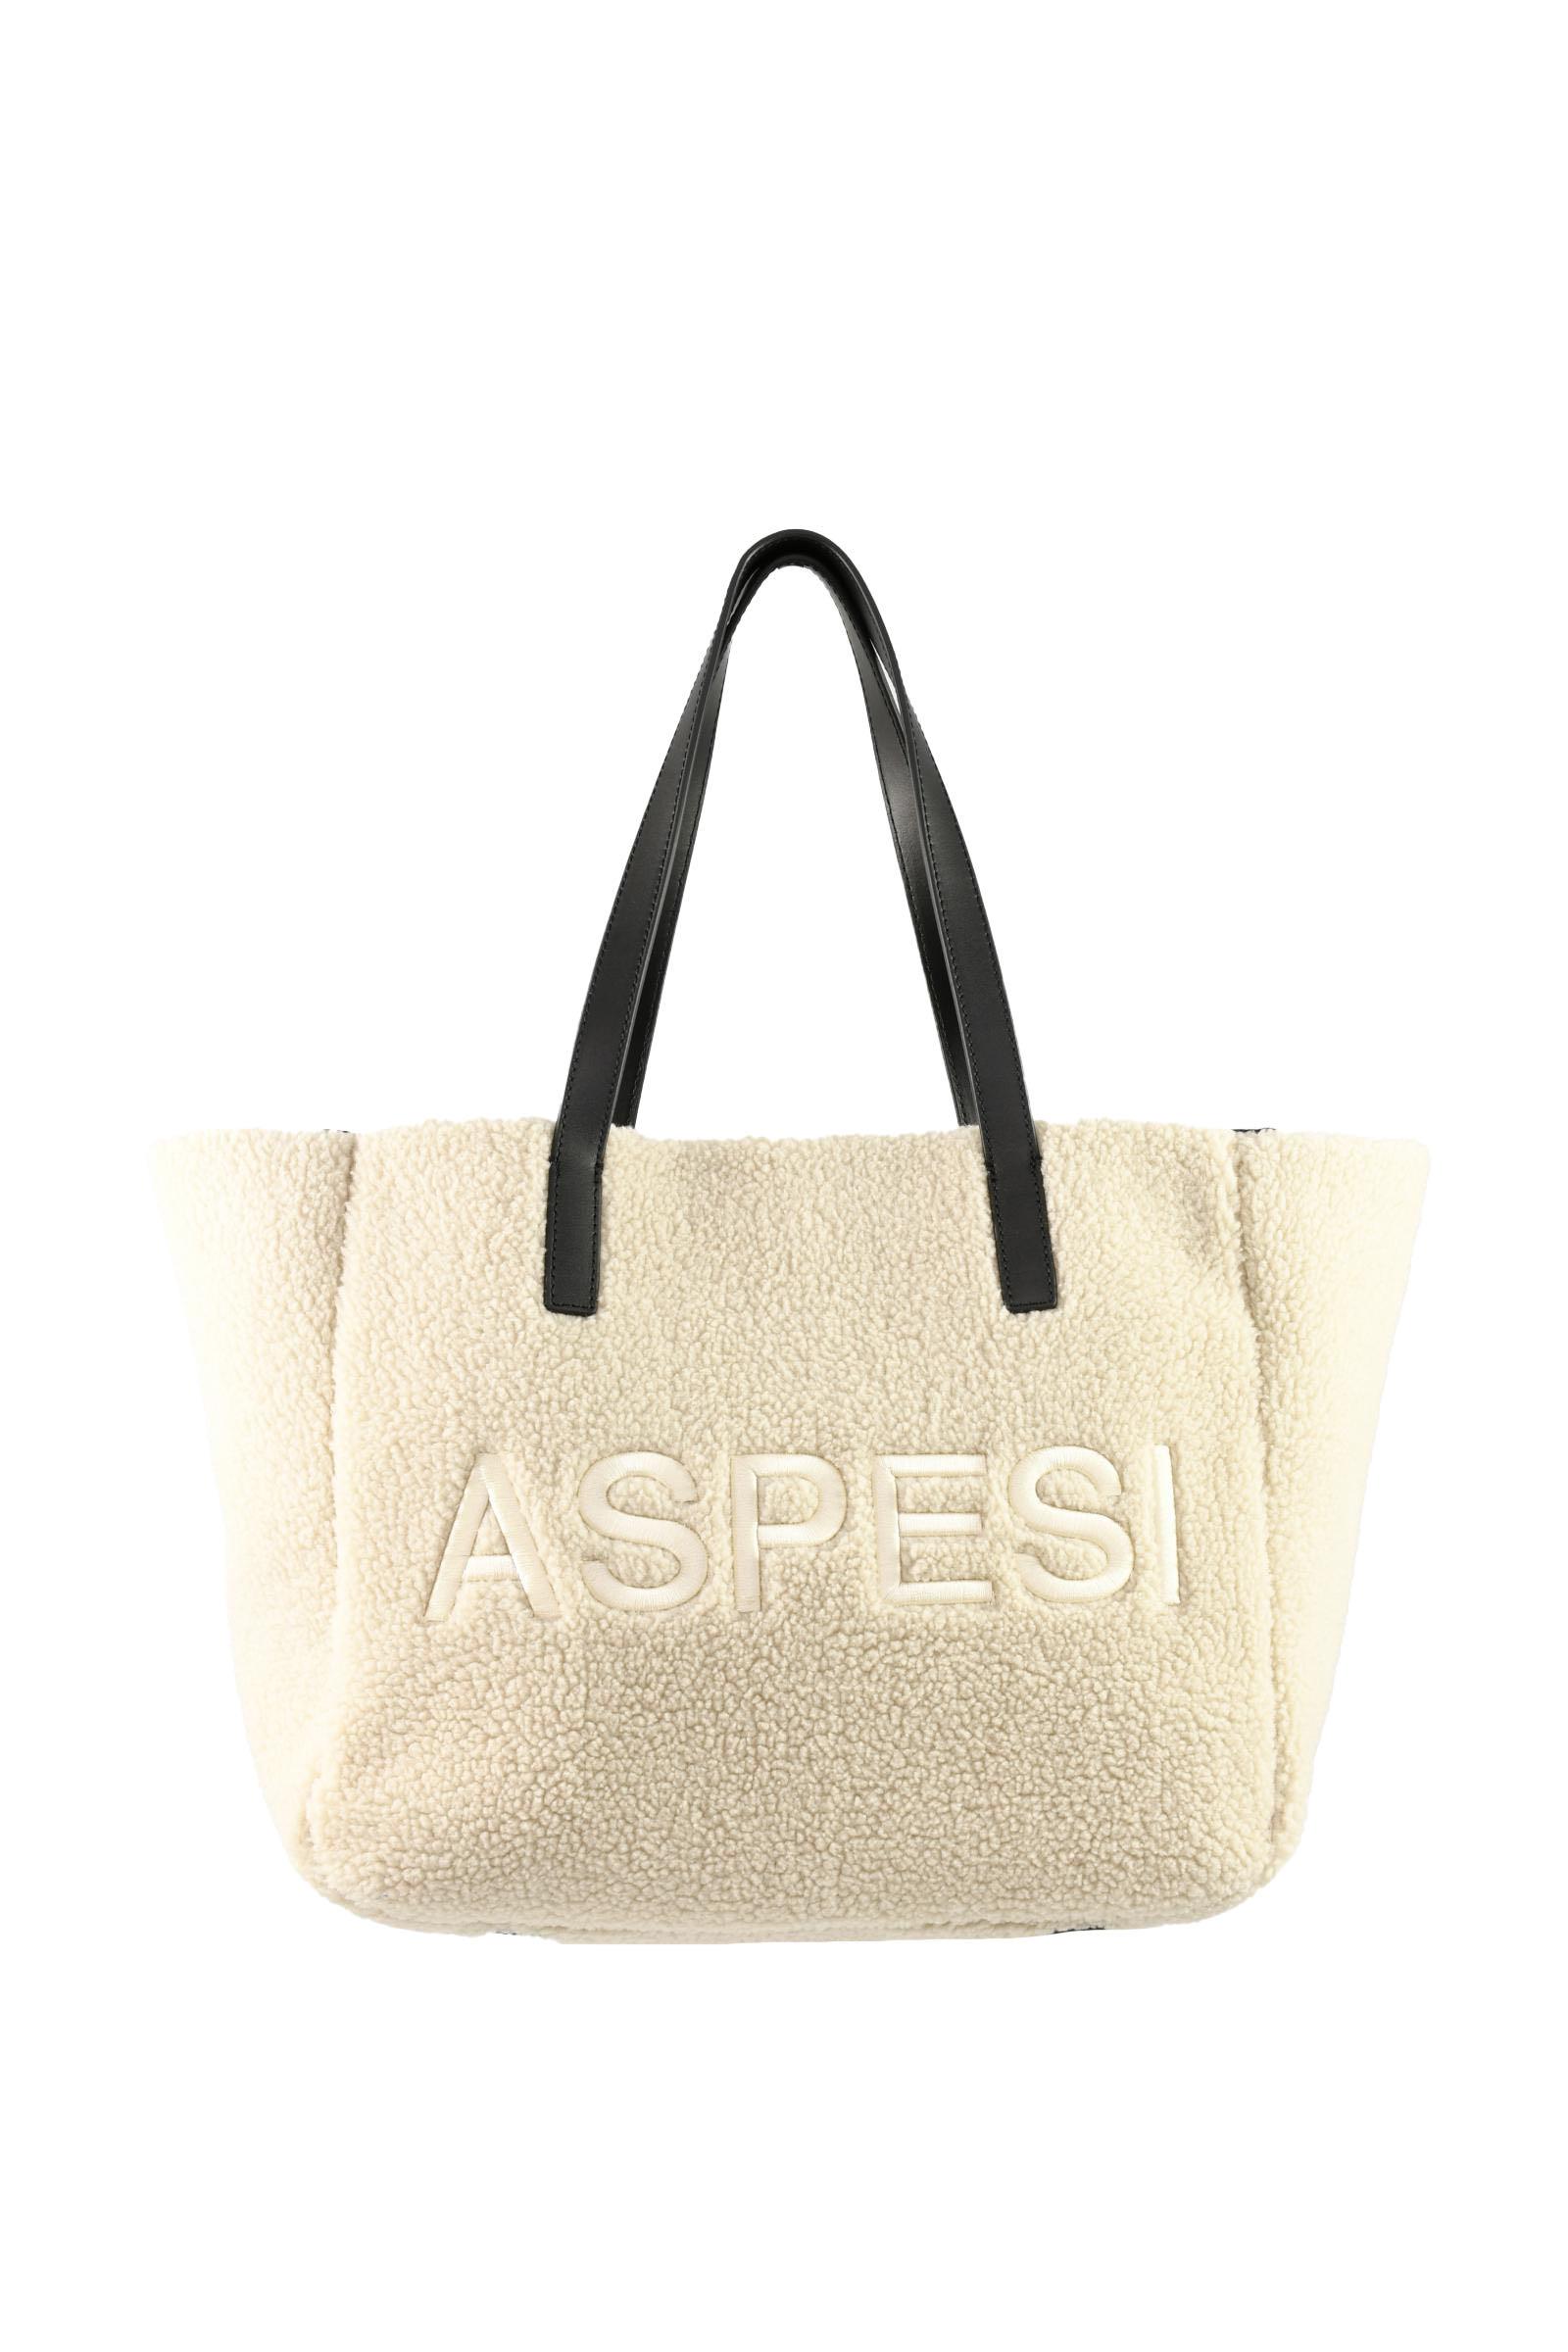 Aspesi Women's Beige Handbag